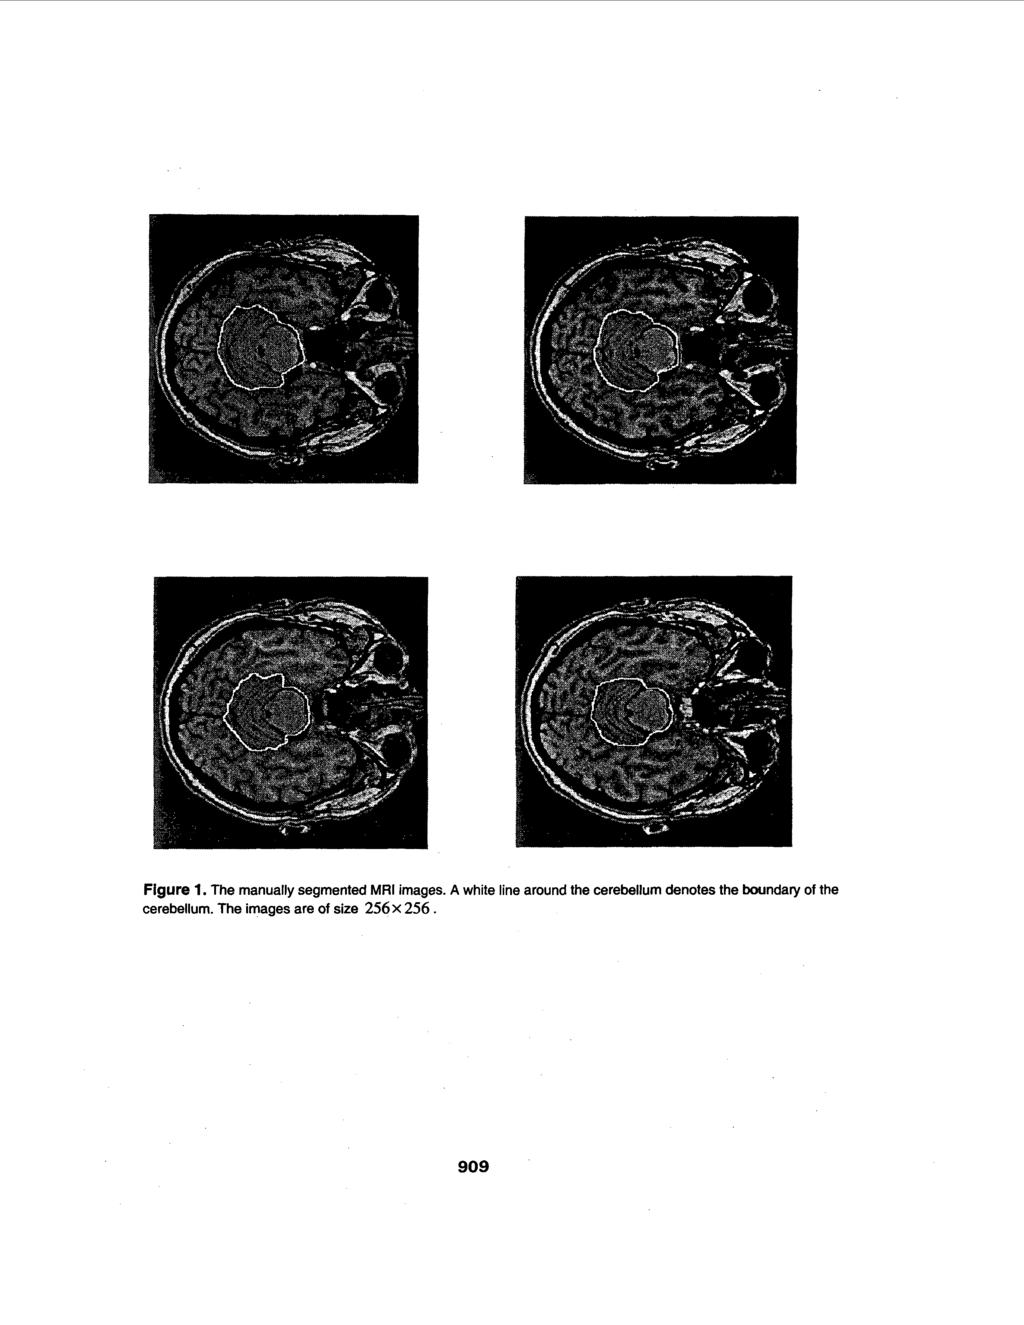 Figure 1. The manually segmented MRI images.